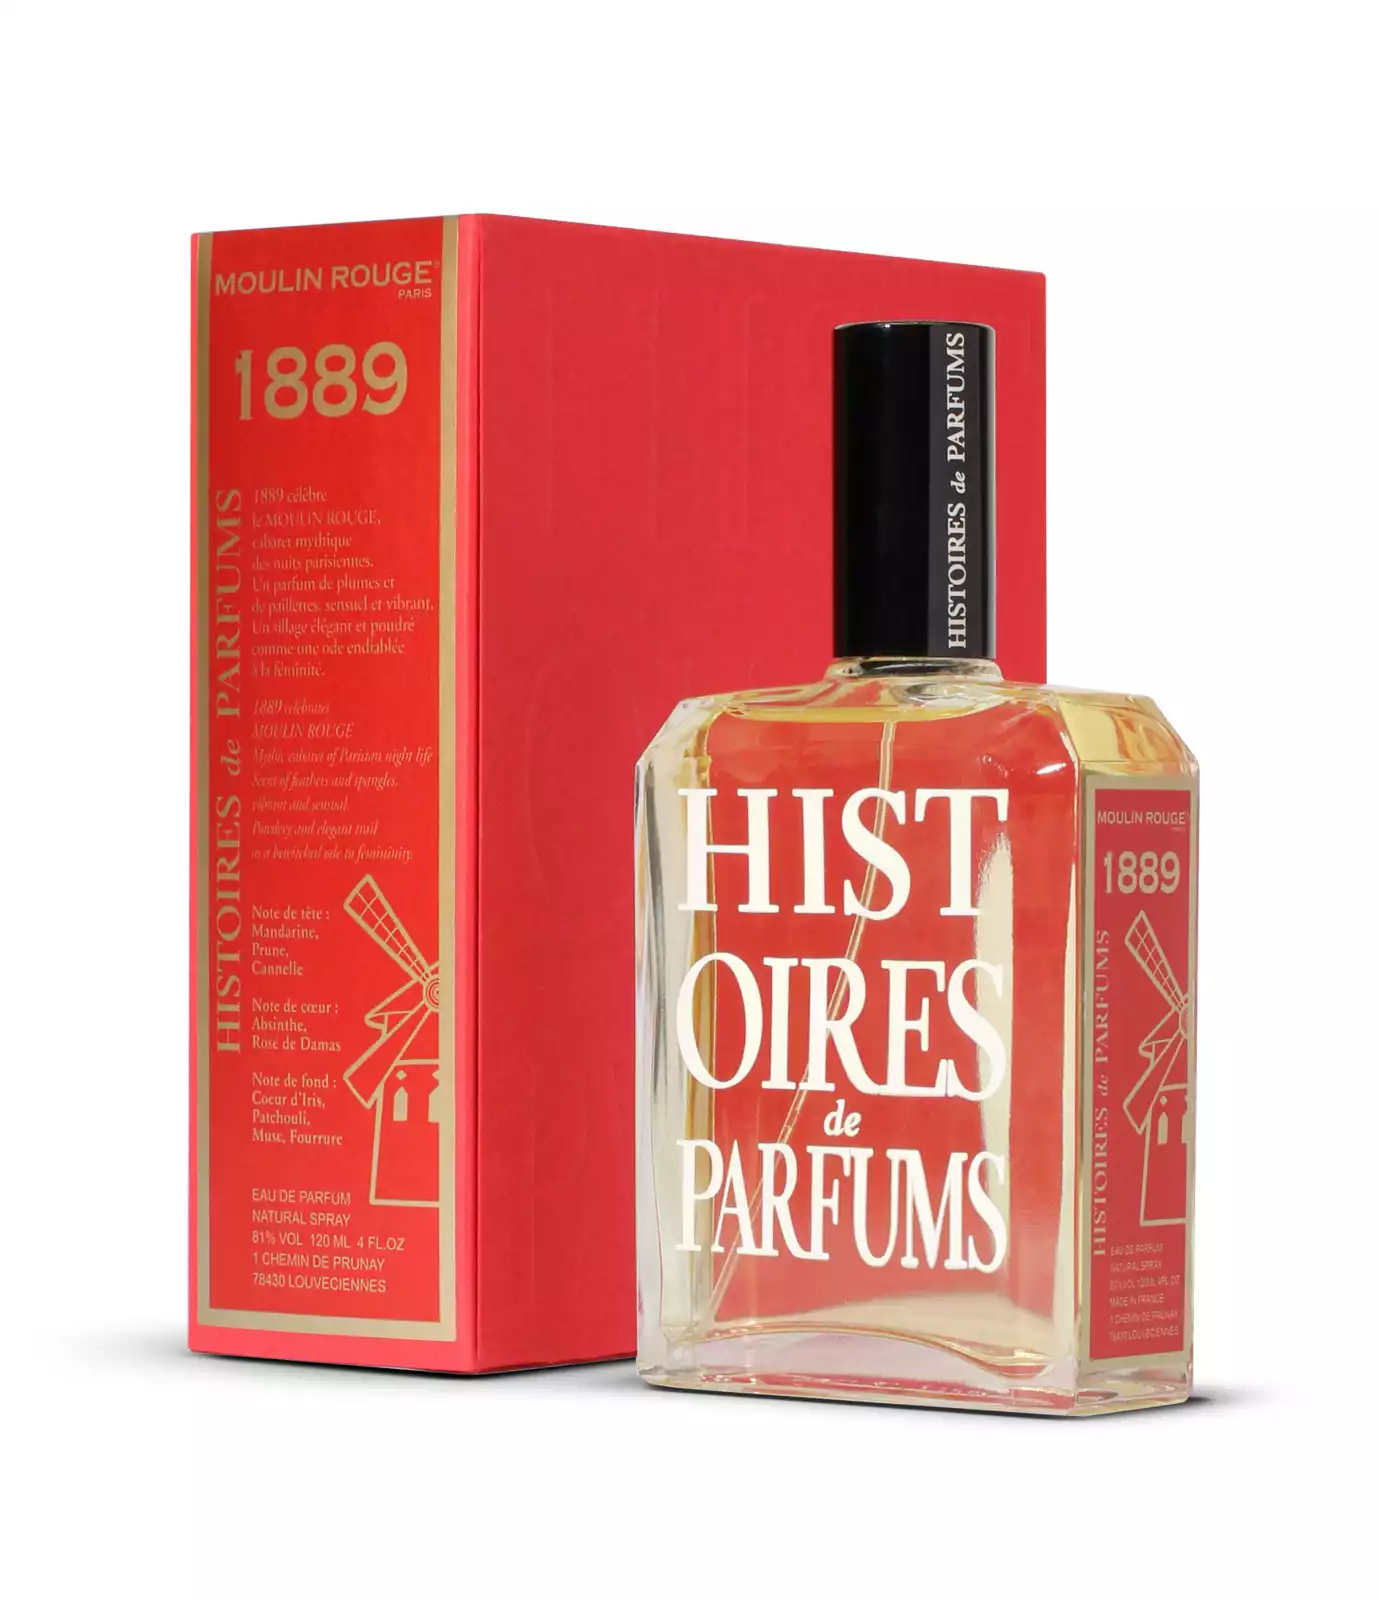 1889 Moulin Rogue – Histoires de Parfums (Feminine)